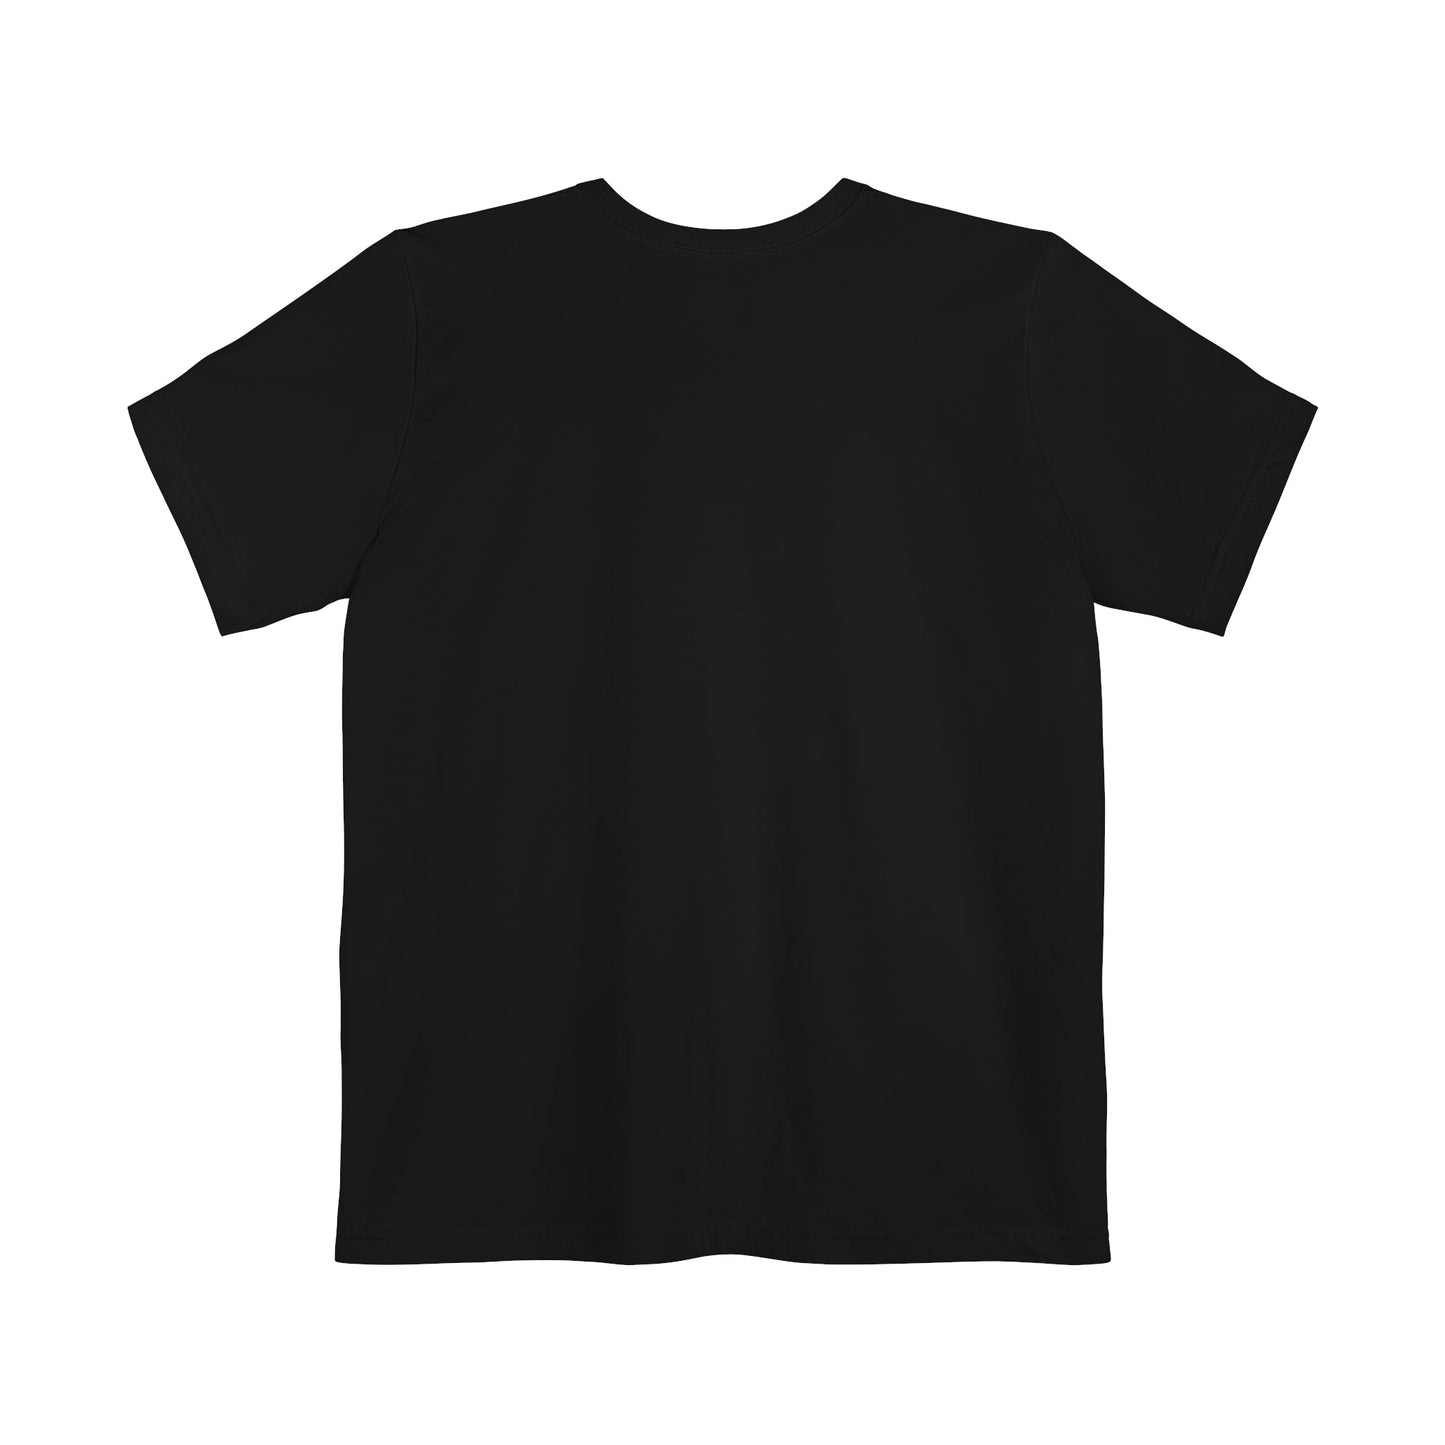 T-Shirt | Mushroom Man Agent Green | Anime Shirt | Unisex Pocket Tee - Moikas